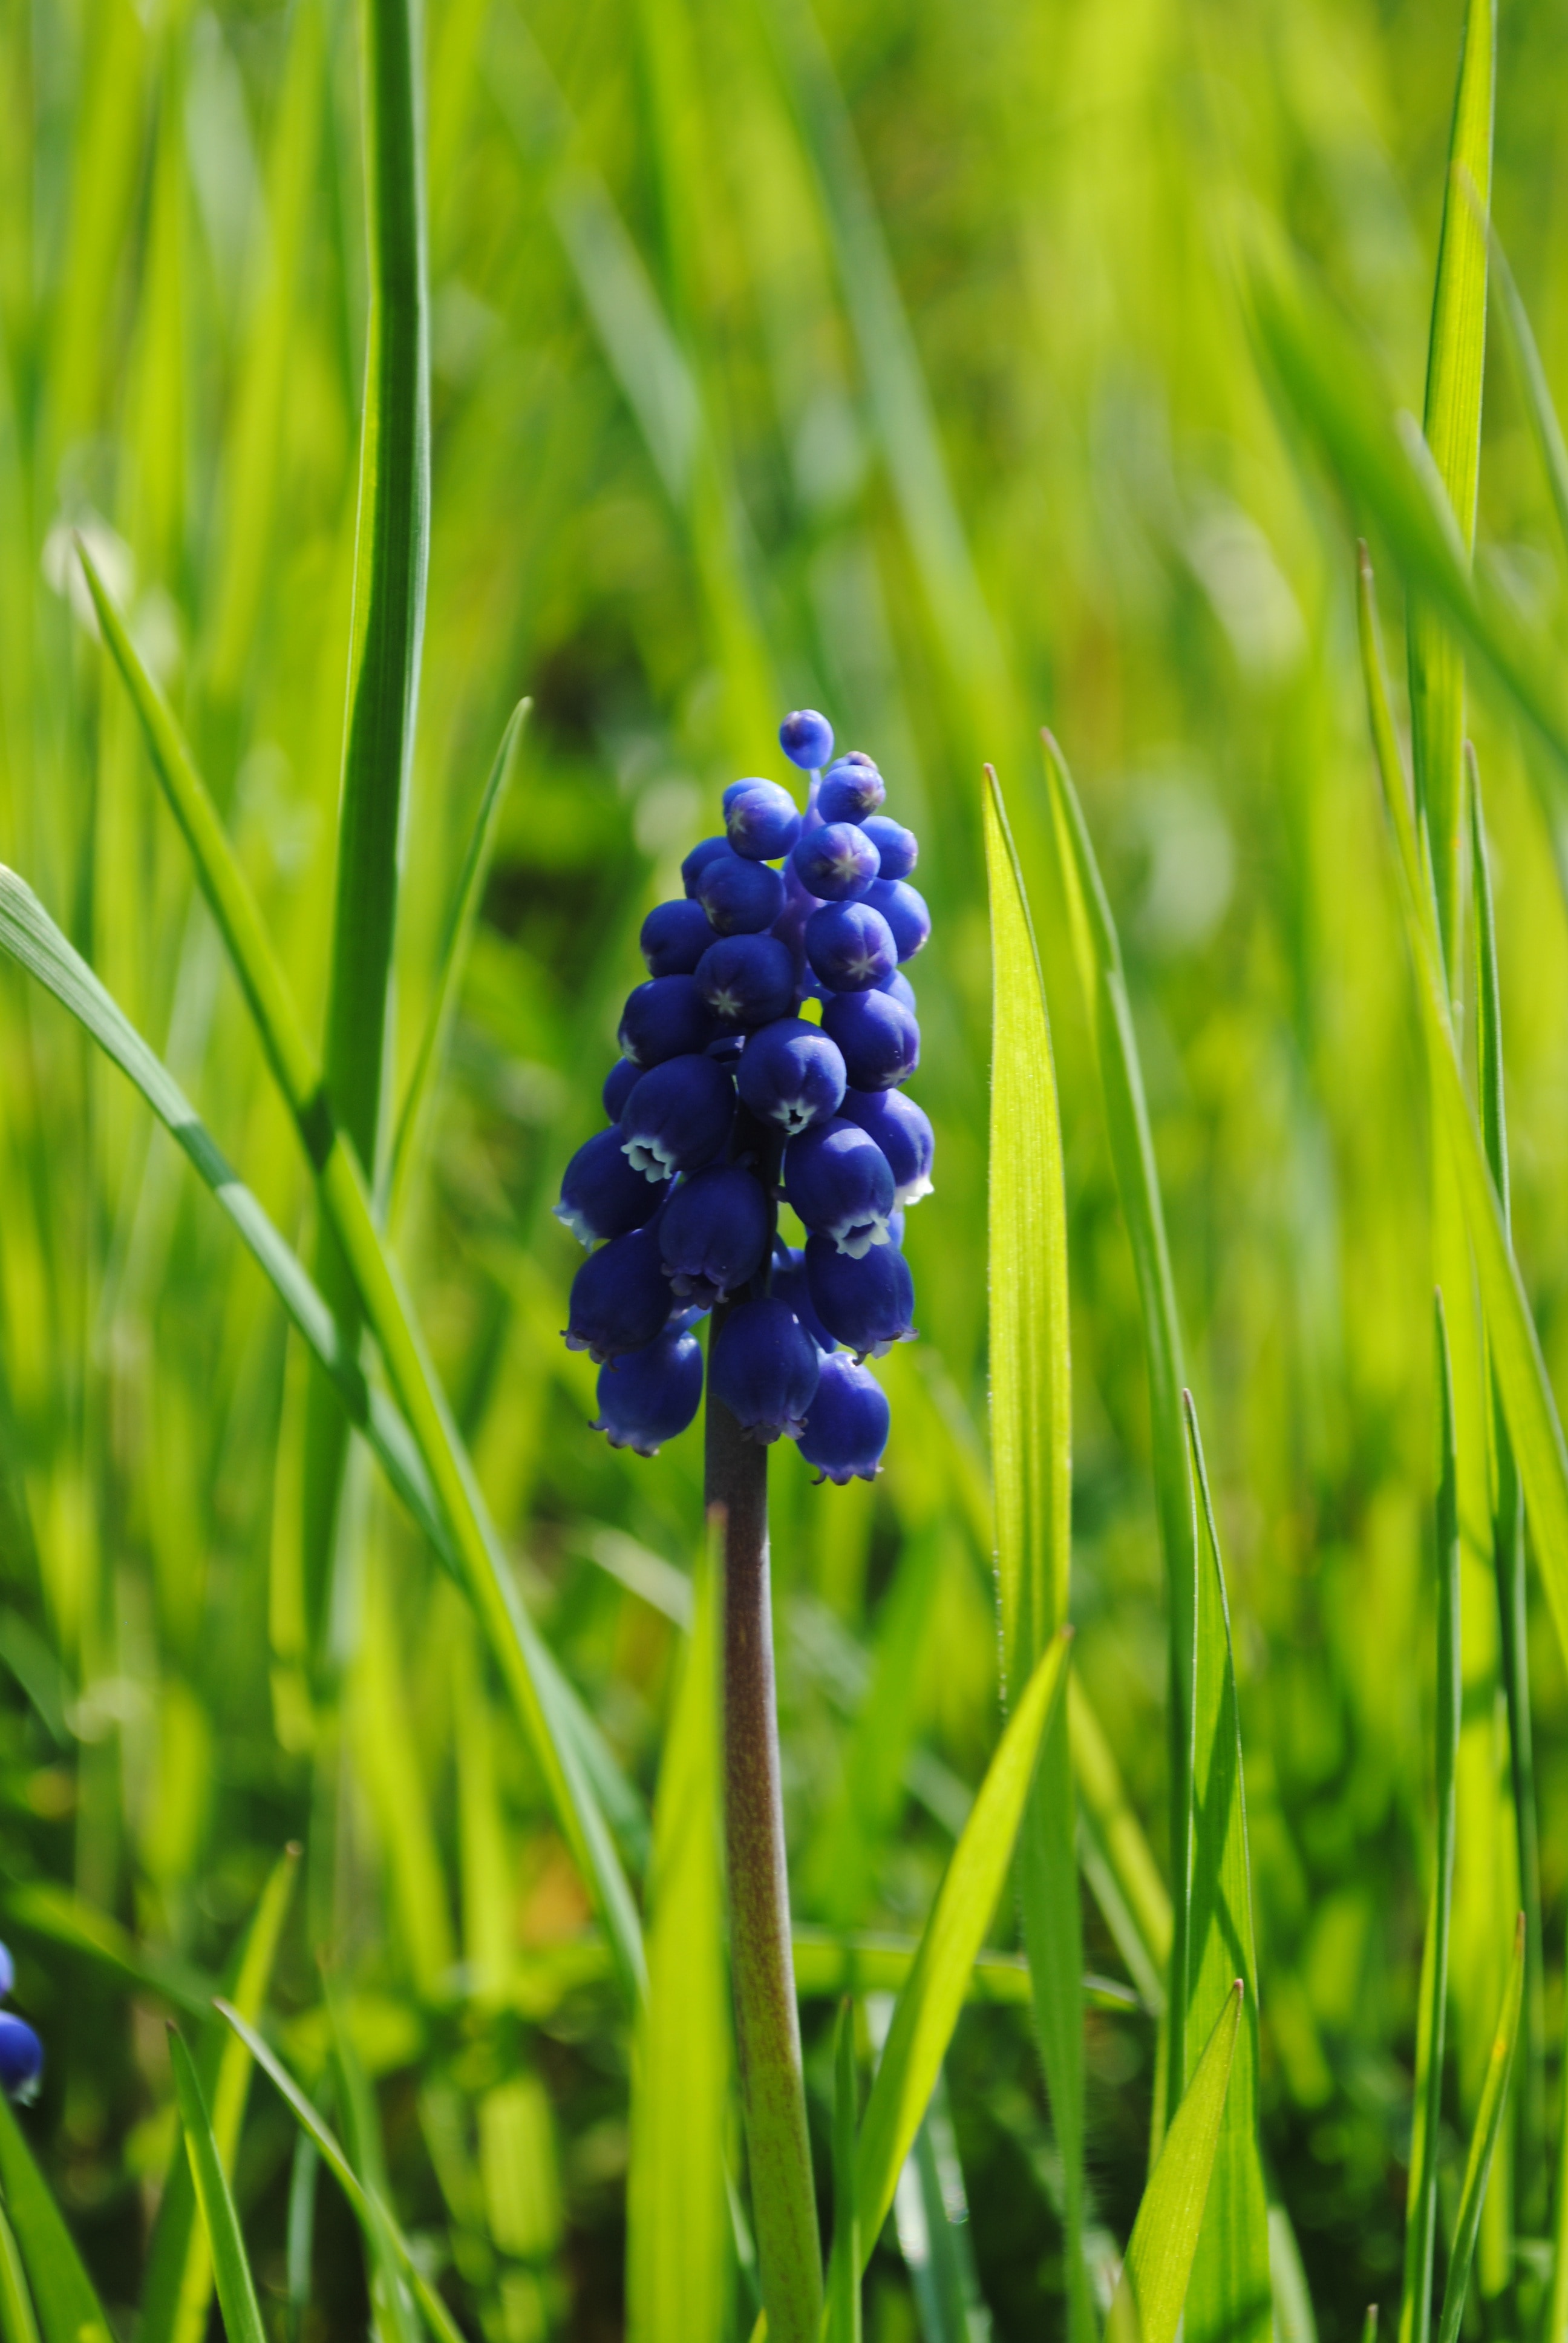 blue flower on green grass lawn